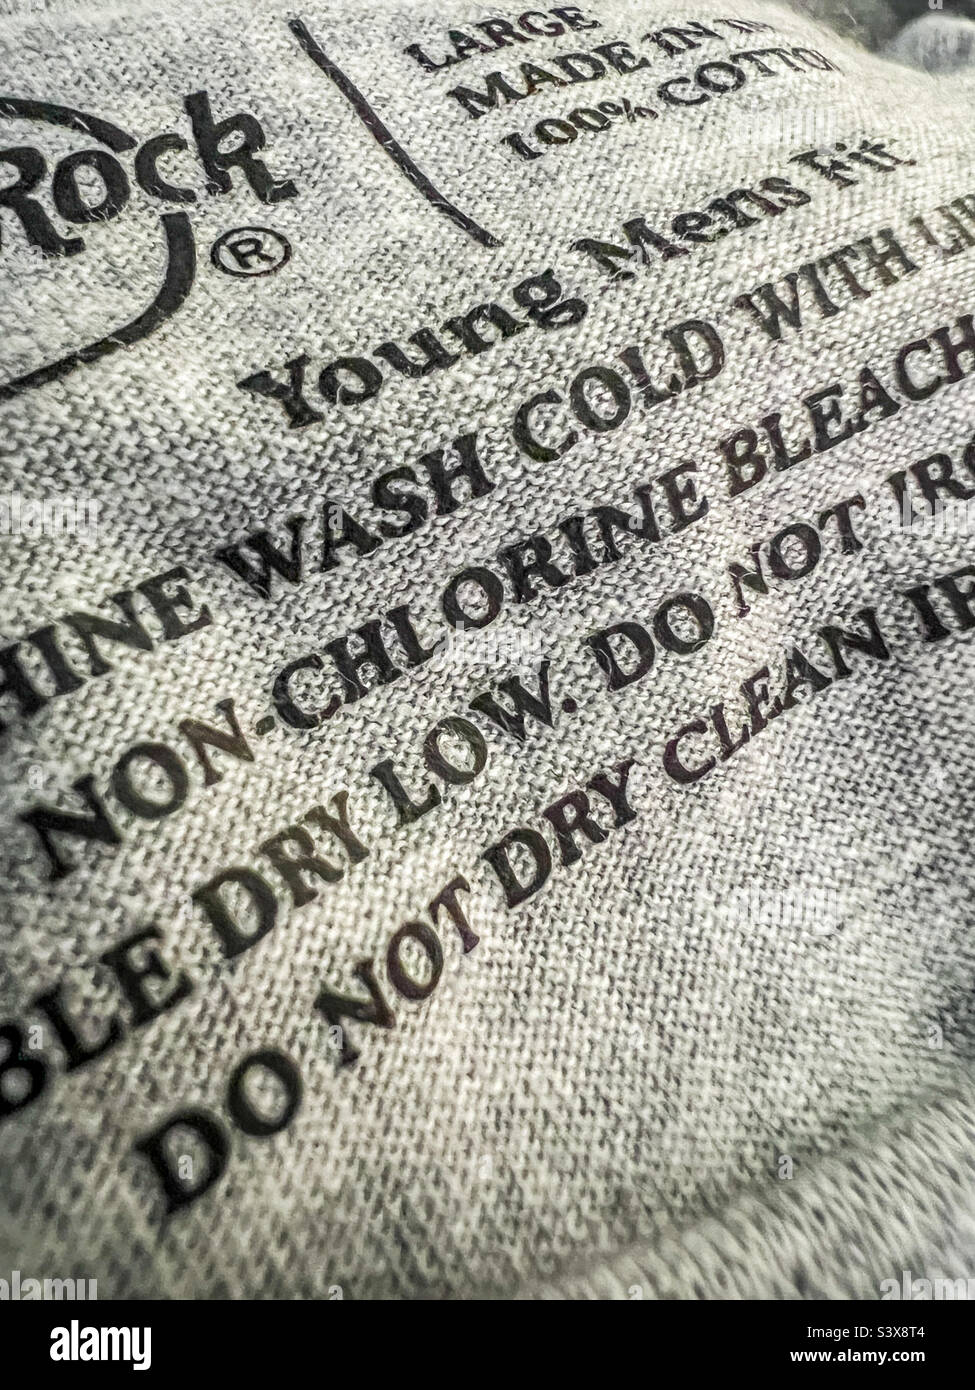 Washing instructions inside men’s t shirt Stock Photo